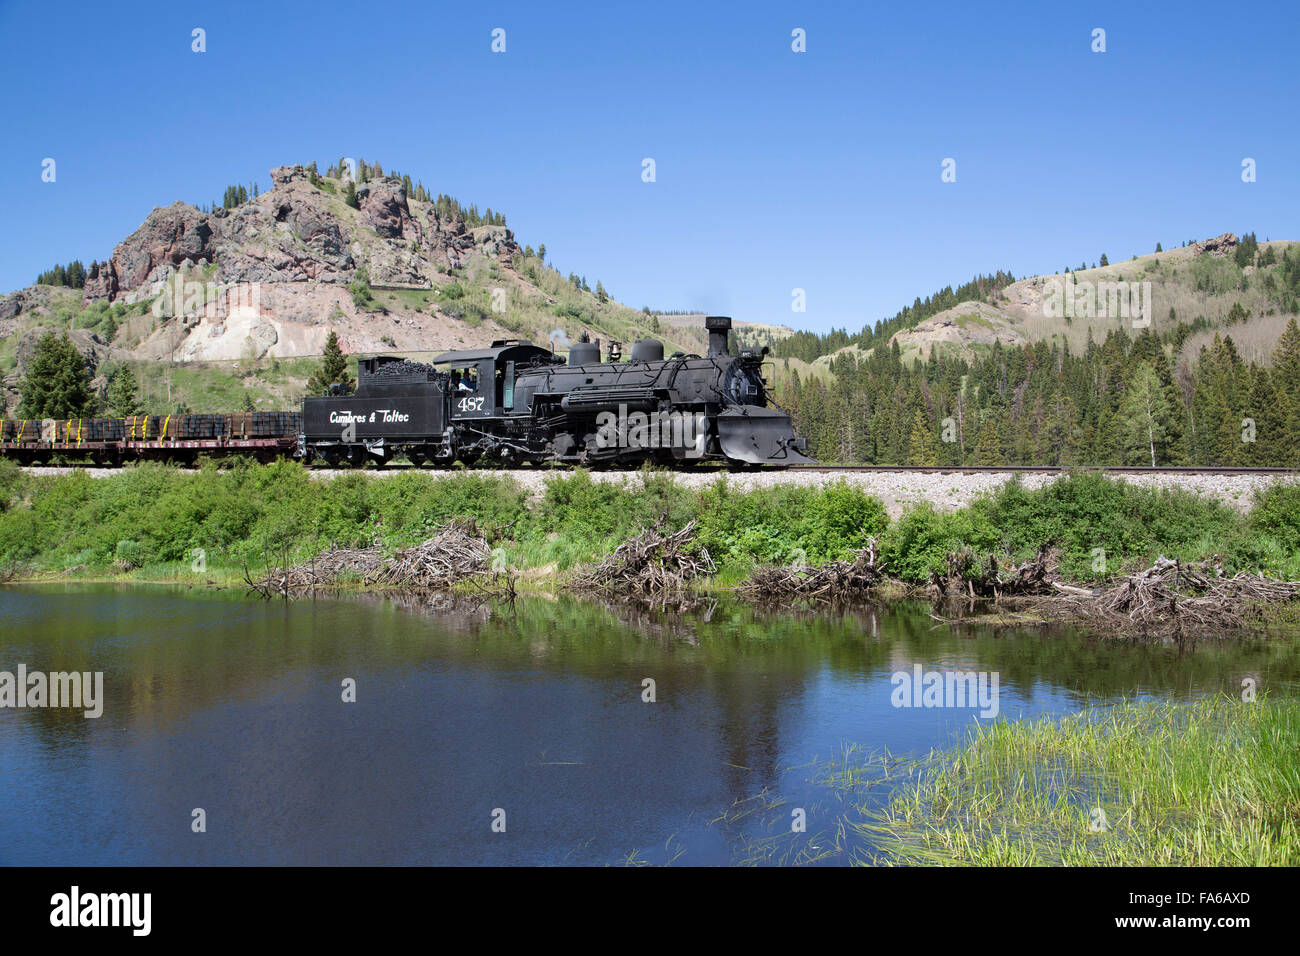 New Mexico and Colorado, Cumbres & Toltec Scenic Railroad, National Historic Landmark, narrow guage, steam powered locomotive Stock Photo